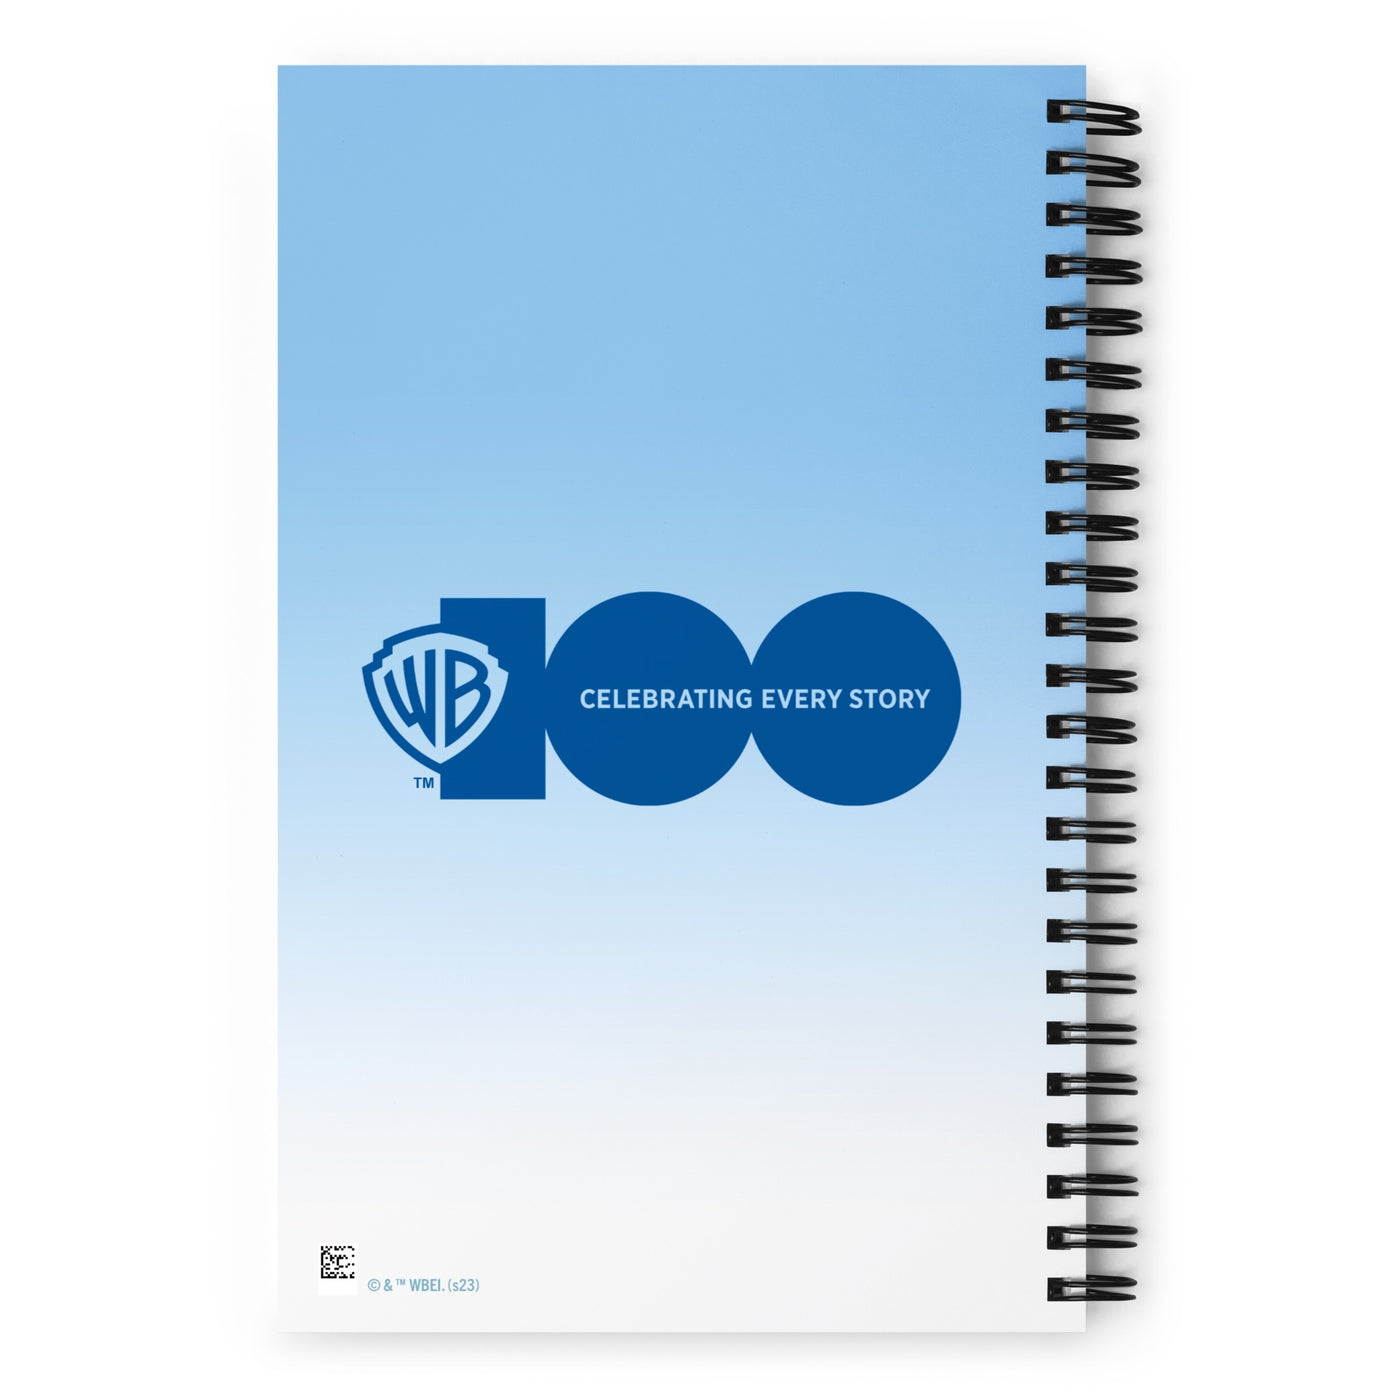 Exclusive WB 100 Warner Bros Shield Looney Tunes Spiral Notebook